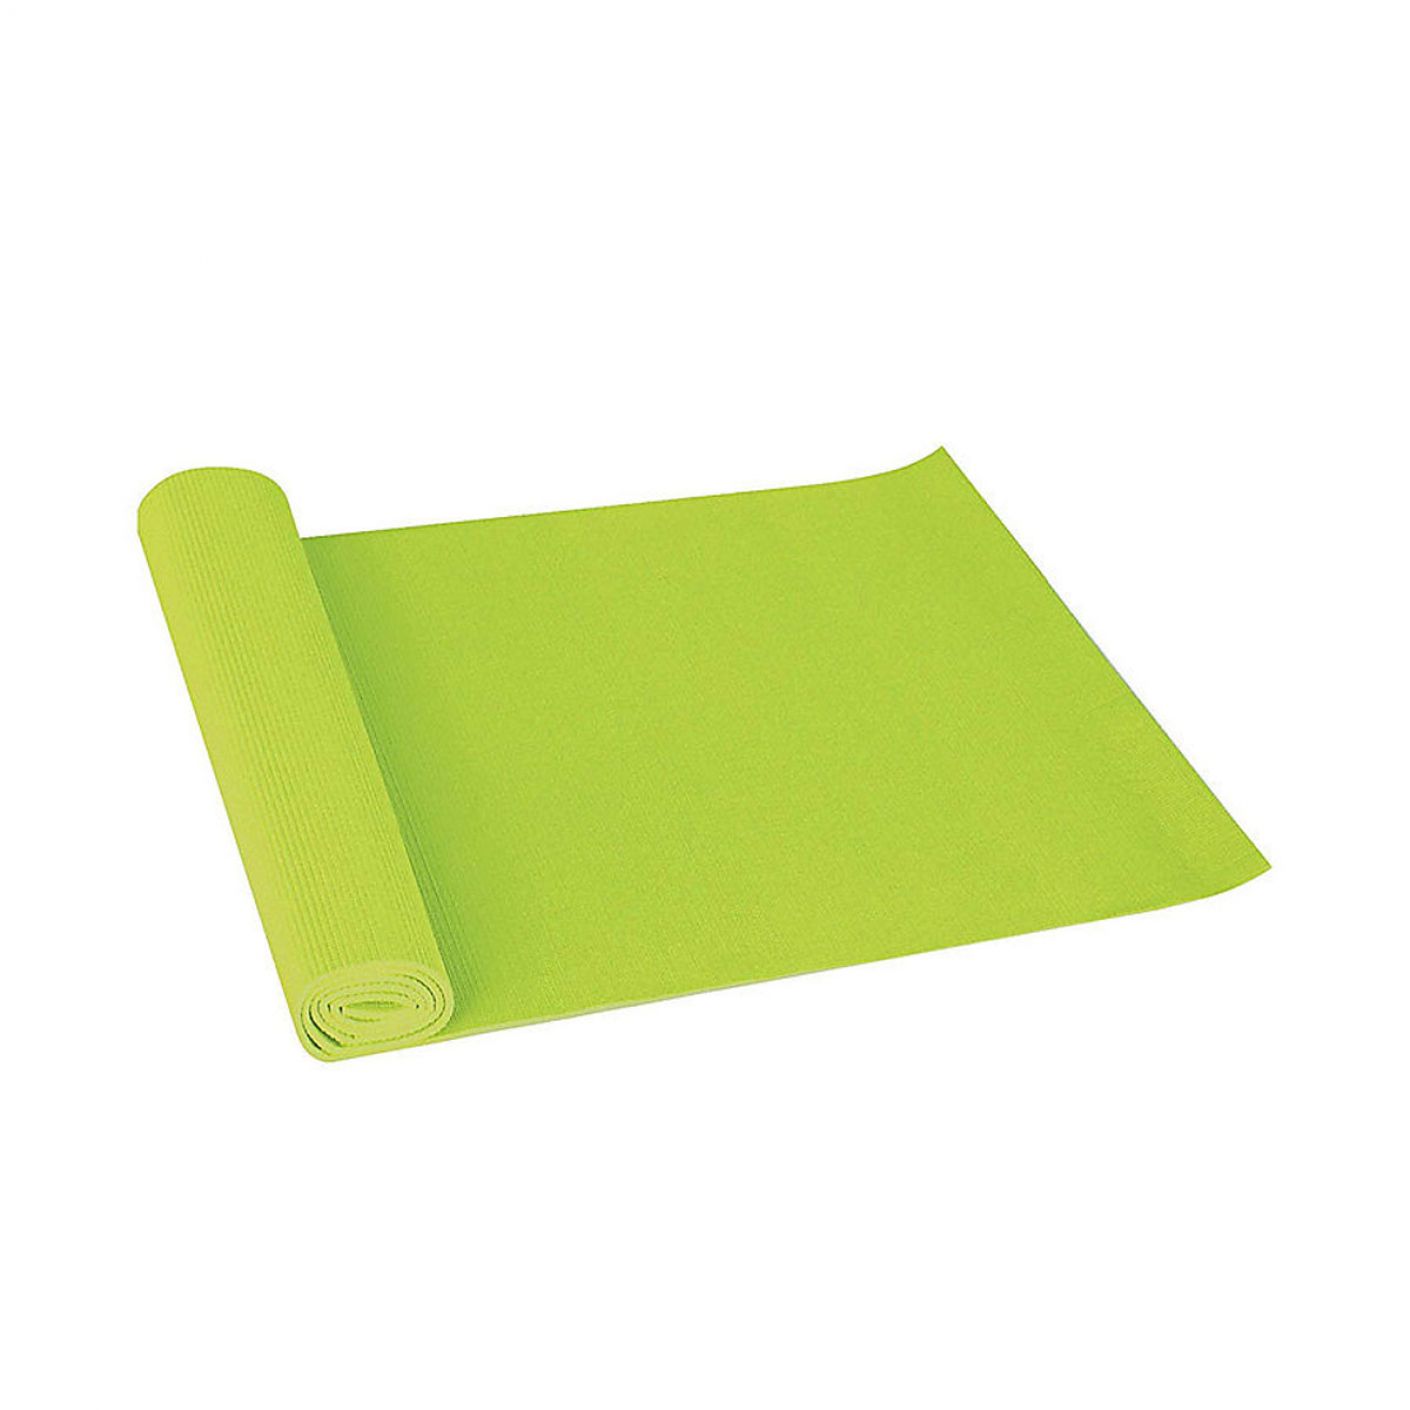 Toorx Non-slip Yoga Mat Green MAT-173